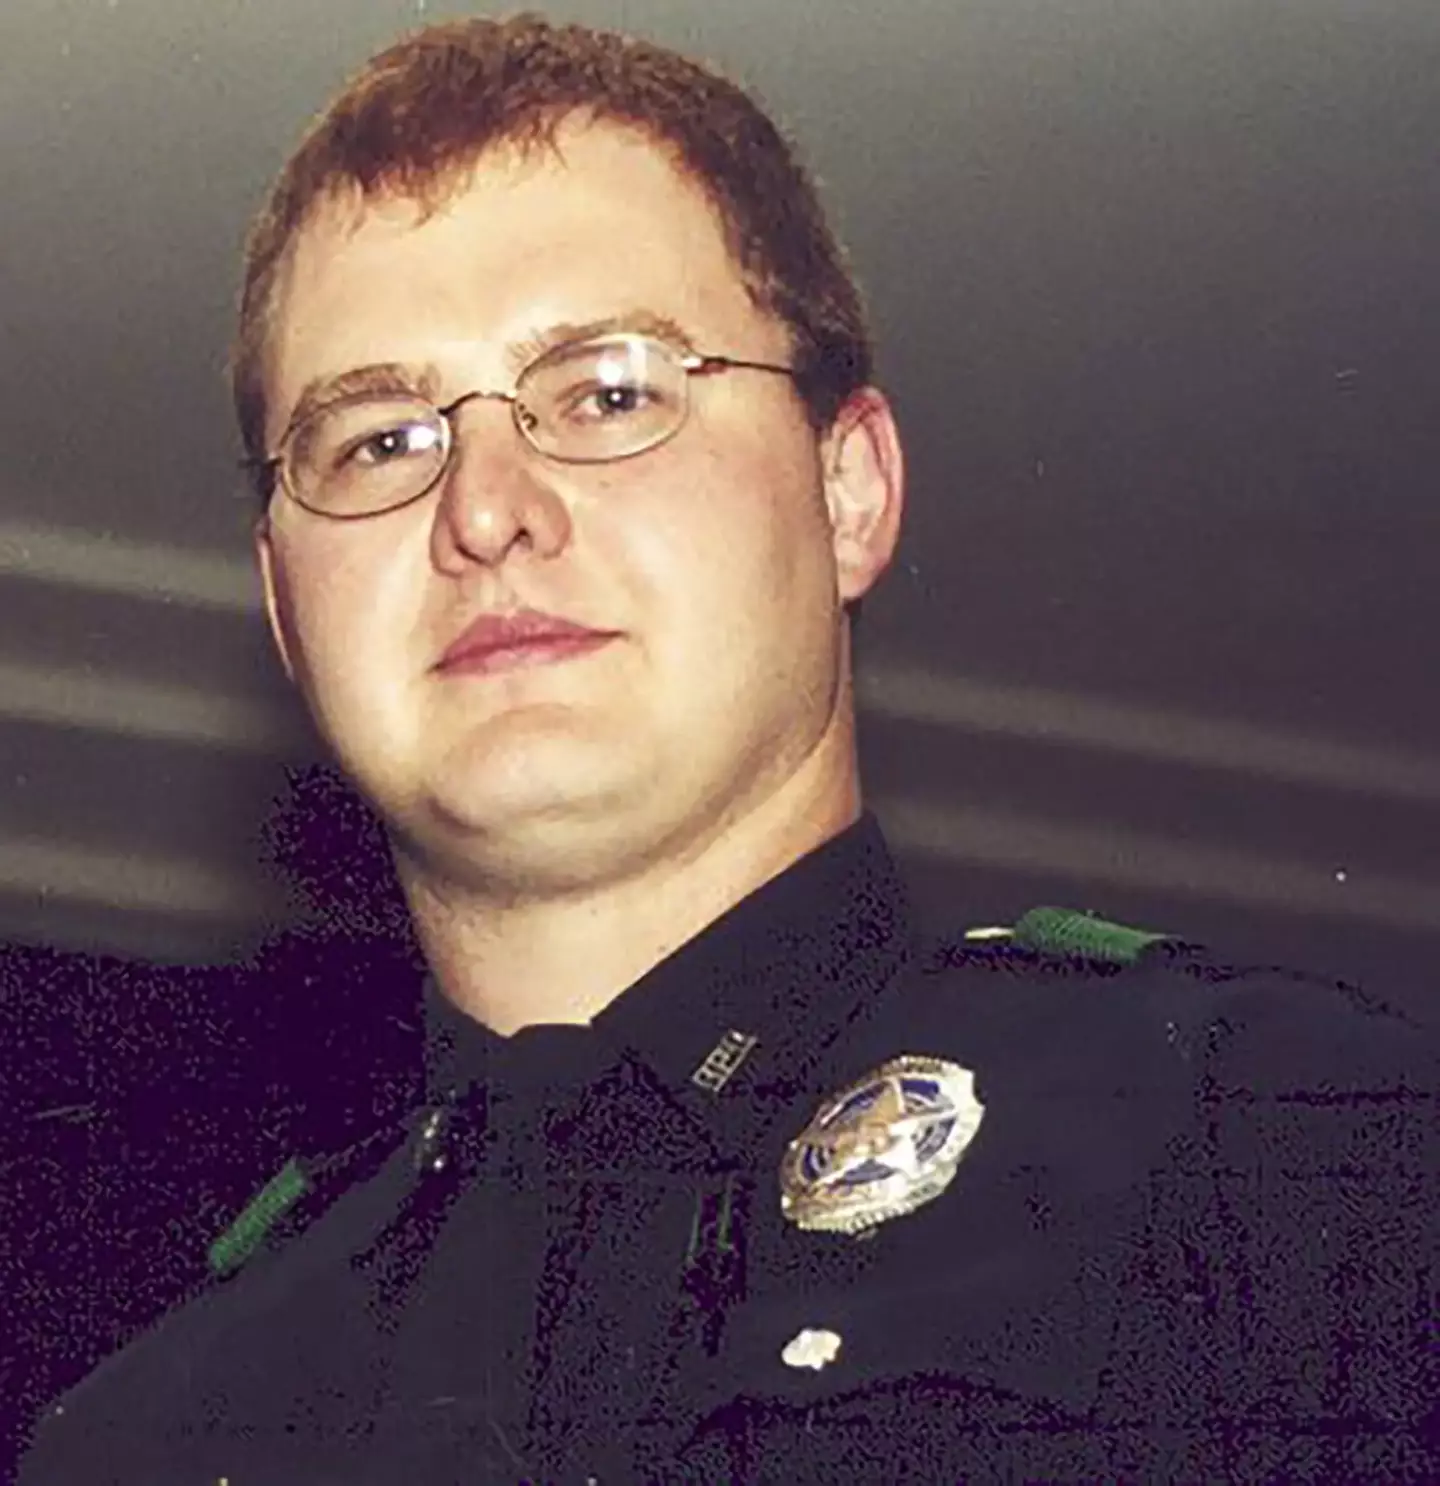 Mark Nix was a senior corporal in the Dallas police force.